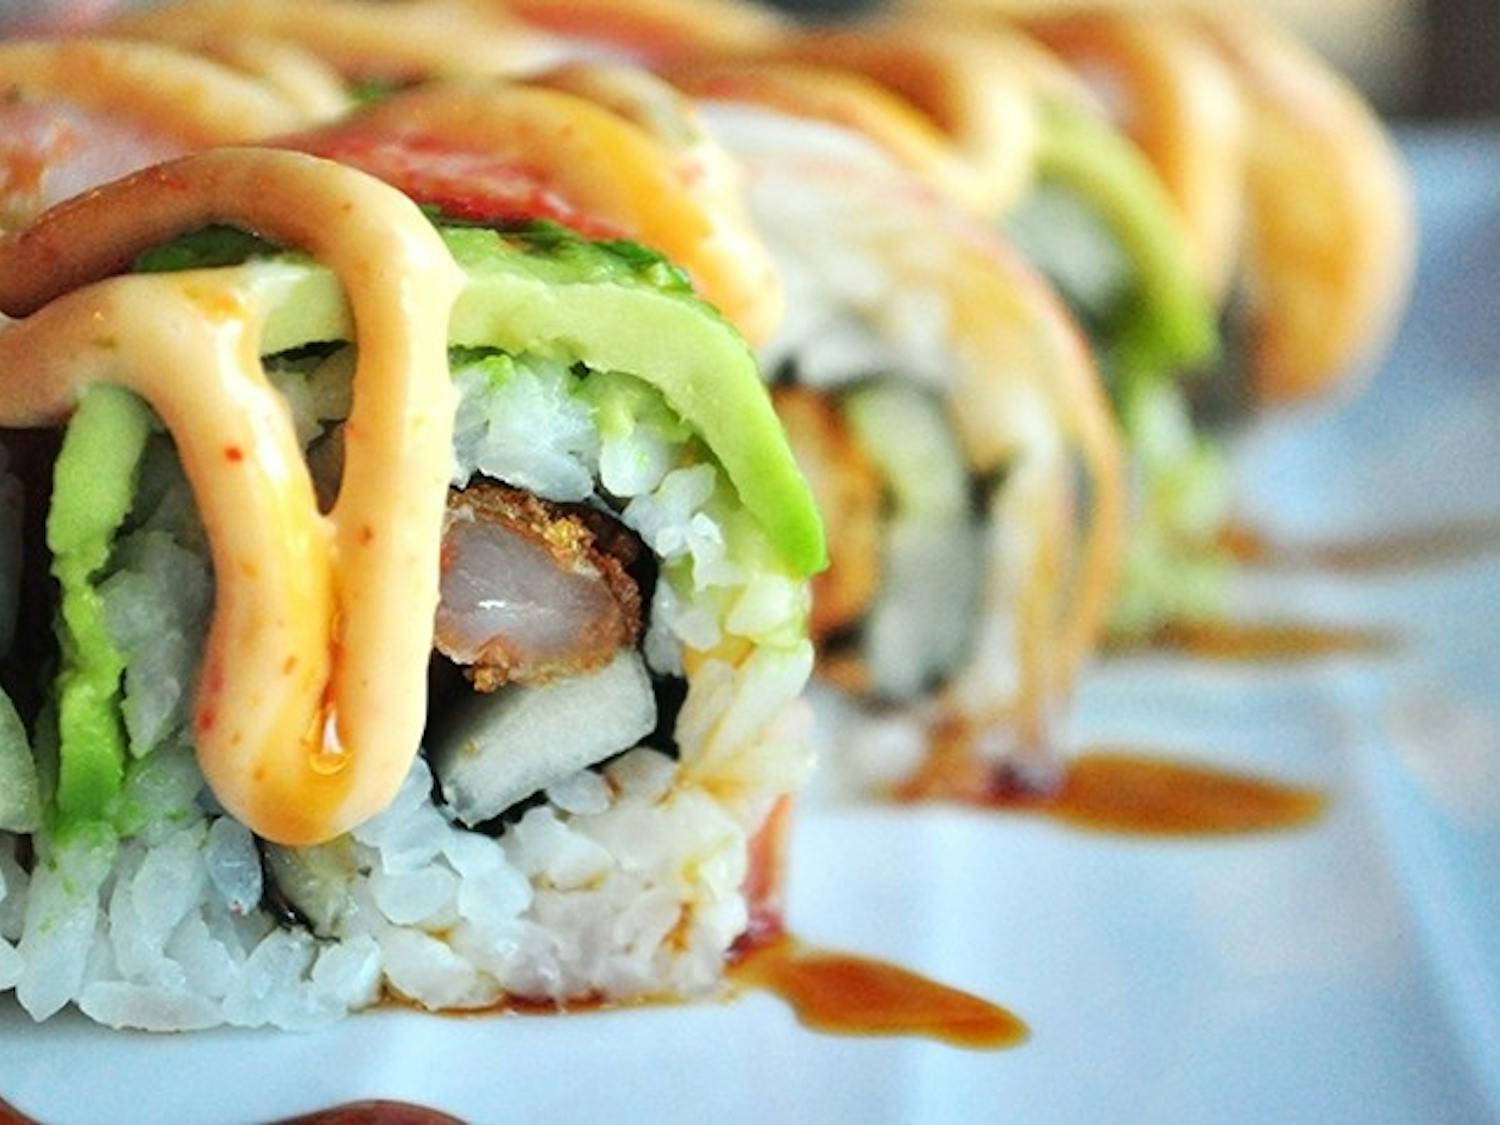 The dragon roll is a combination of crunchy shrimp, avocado, cucumber, and Takosushi sauce with teryaki glaze.